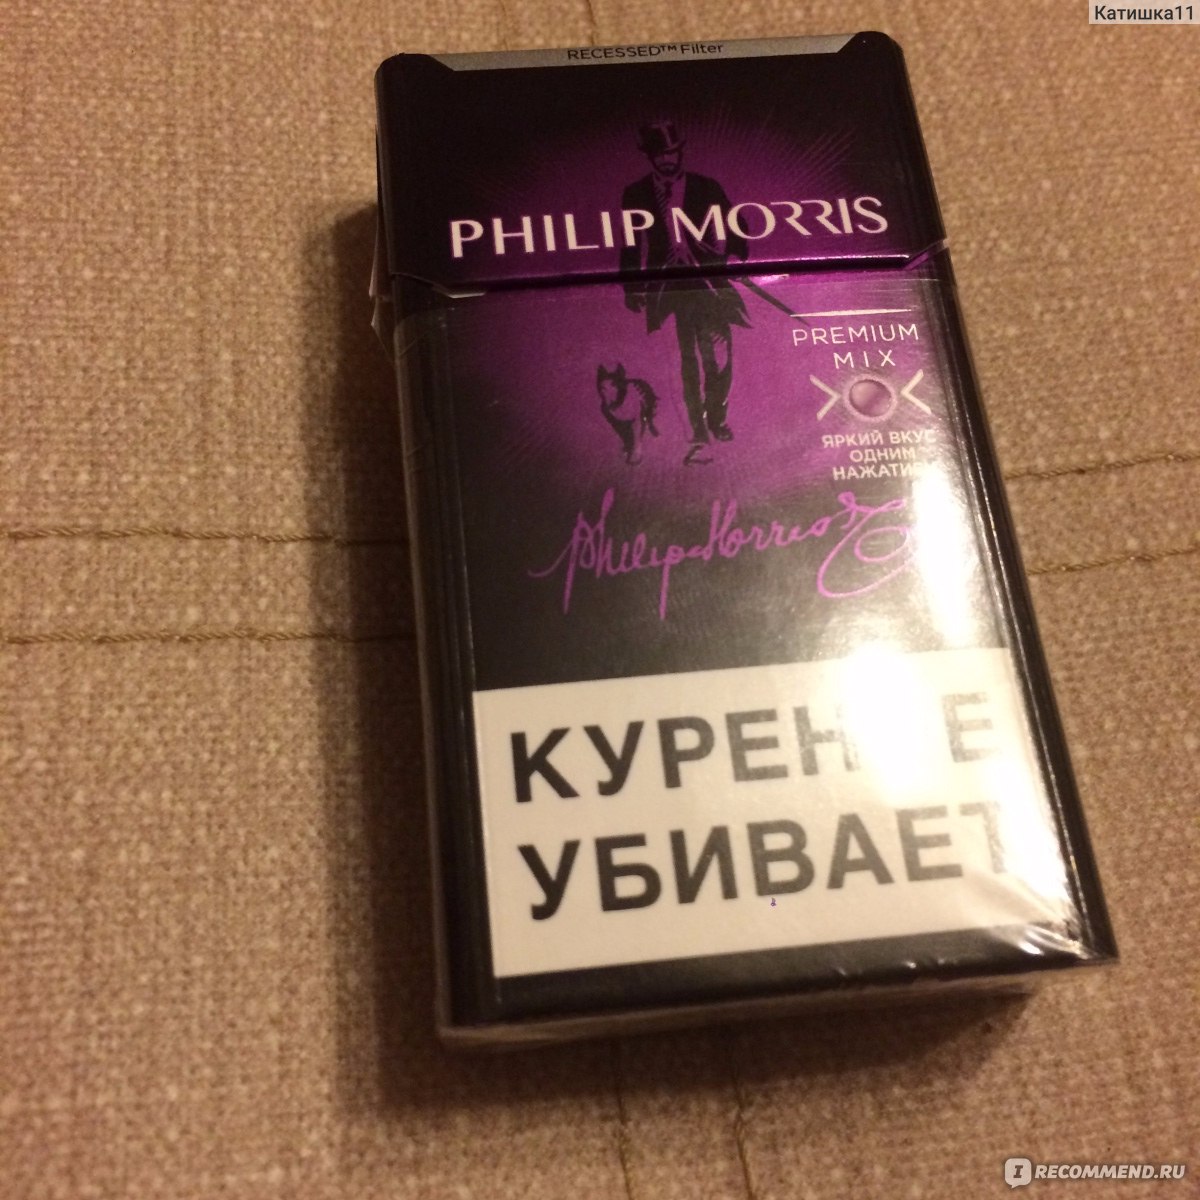 Сигареты филип моррис с кнопкой цена. Сигареты Филип Моррис с кнопкой. Сигареты Филип Моррис с кнопкой фиолетовой. Сигареты Philip Morris с фиолетовой кнопкой.